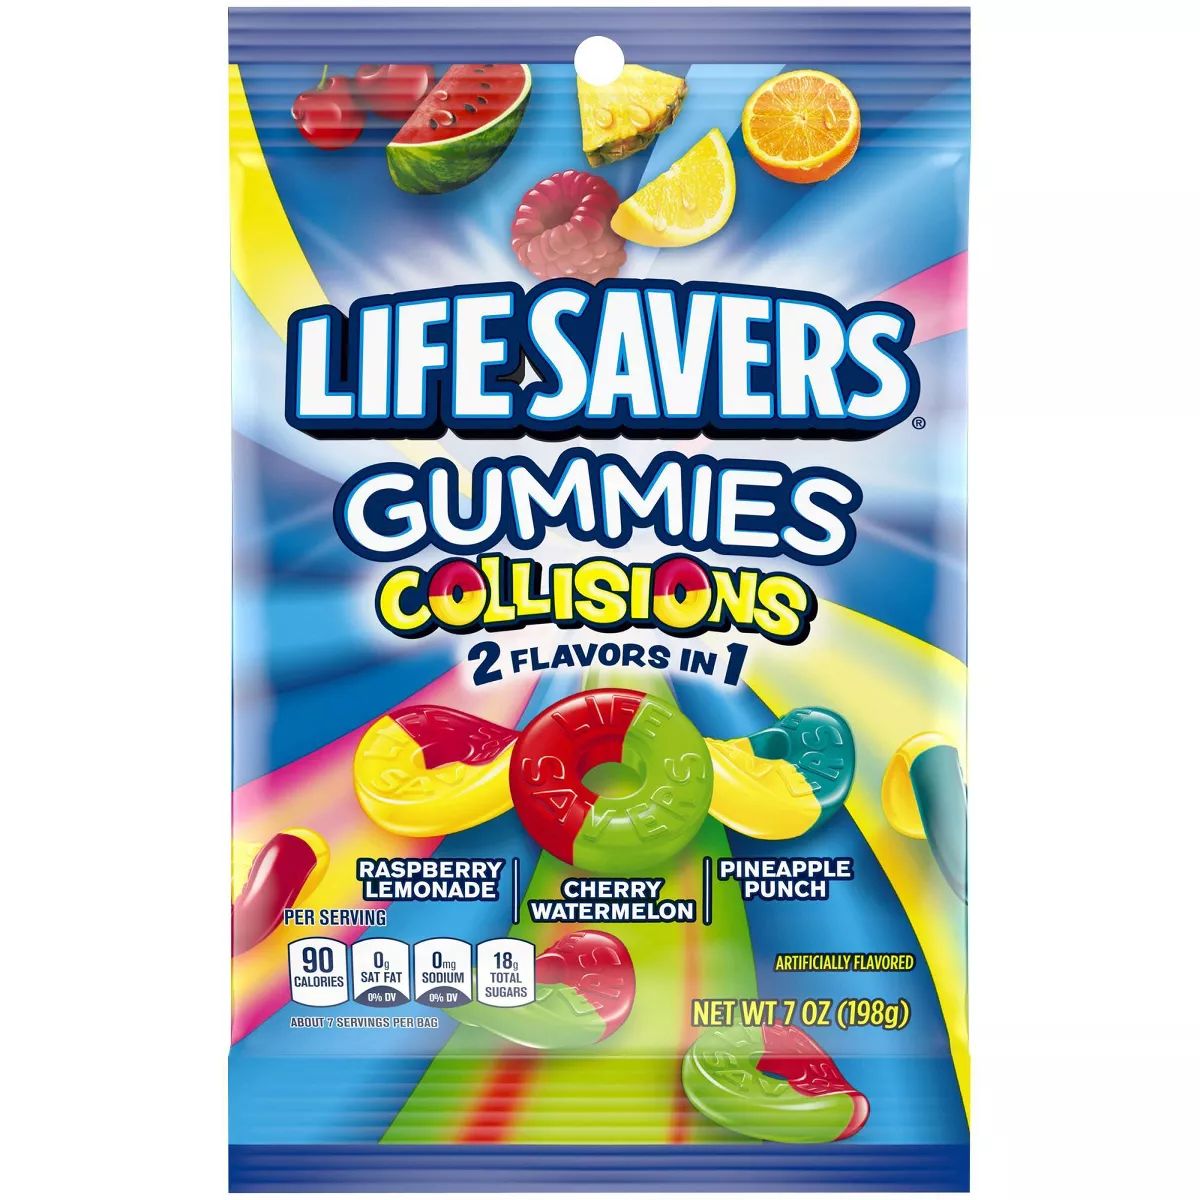 Lifesavers Gummies Collisions 7oz | Target